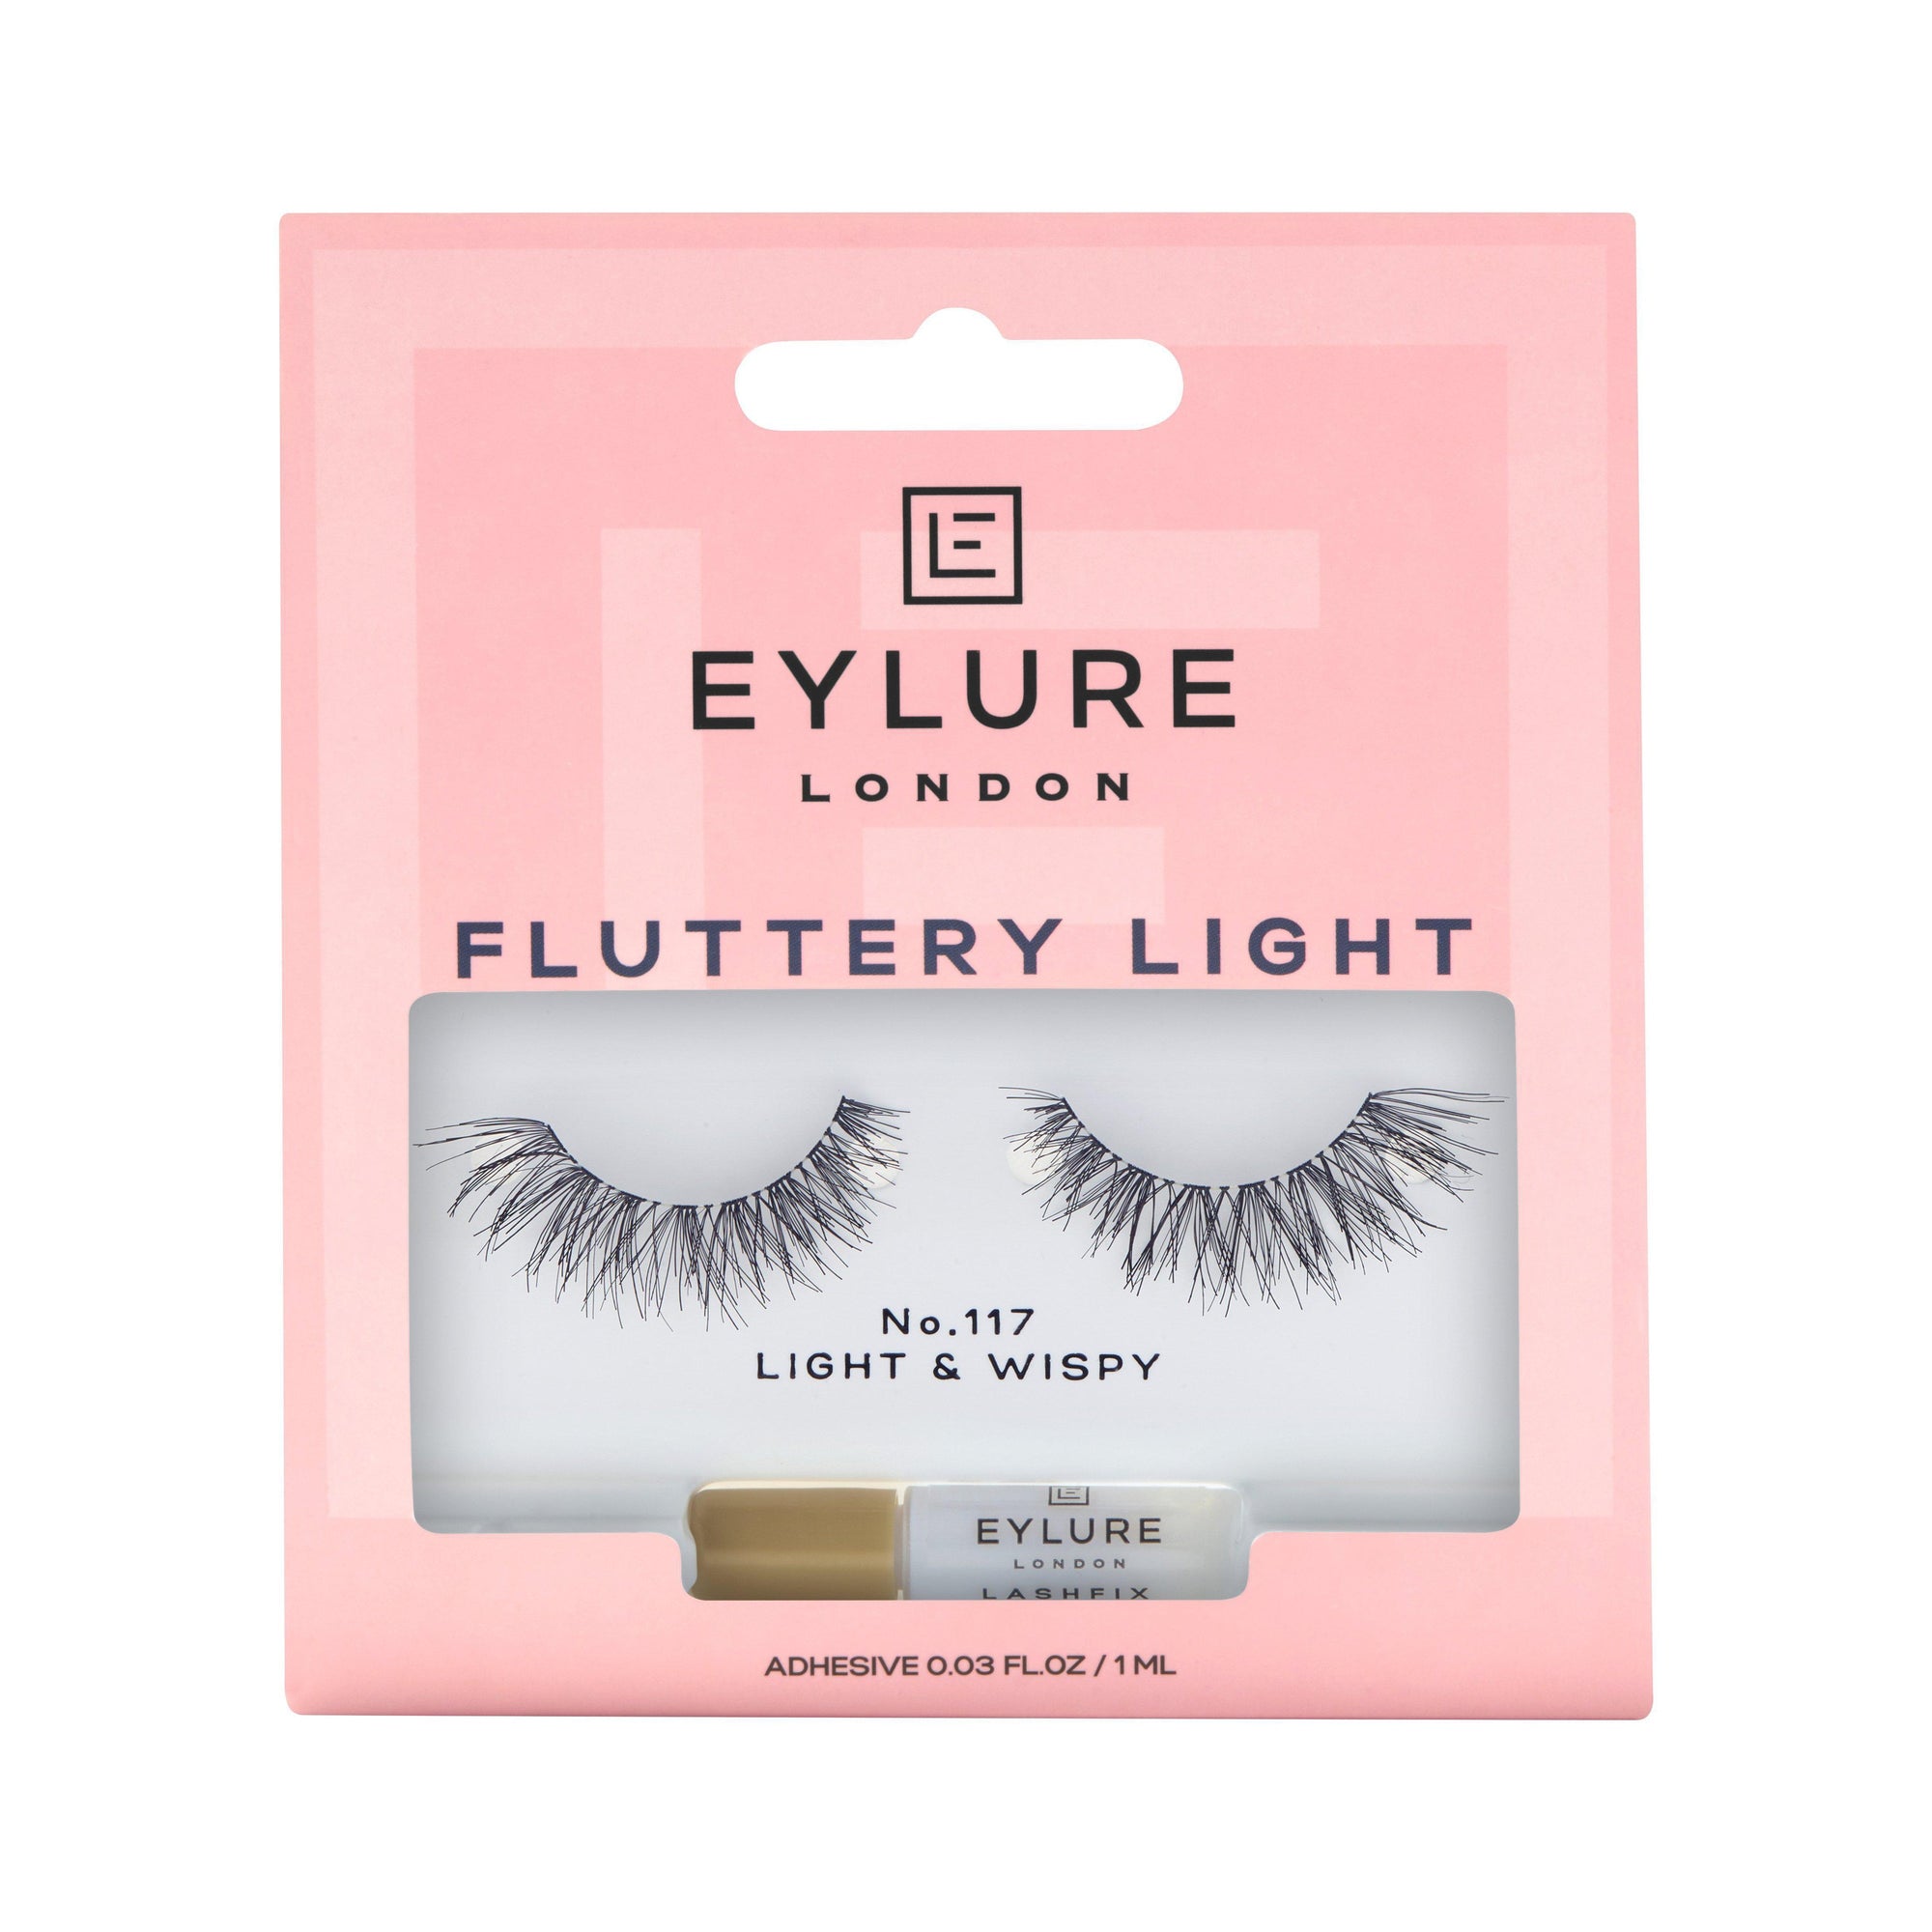 Eylure Fluttery Light #117